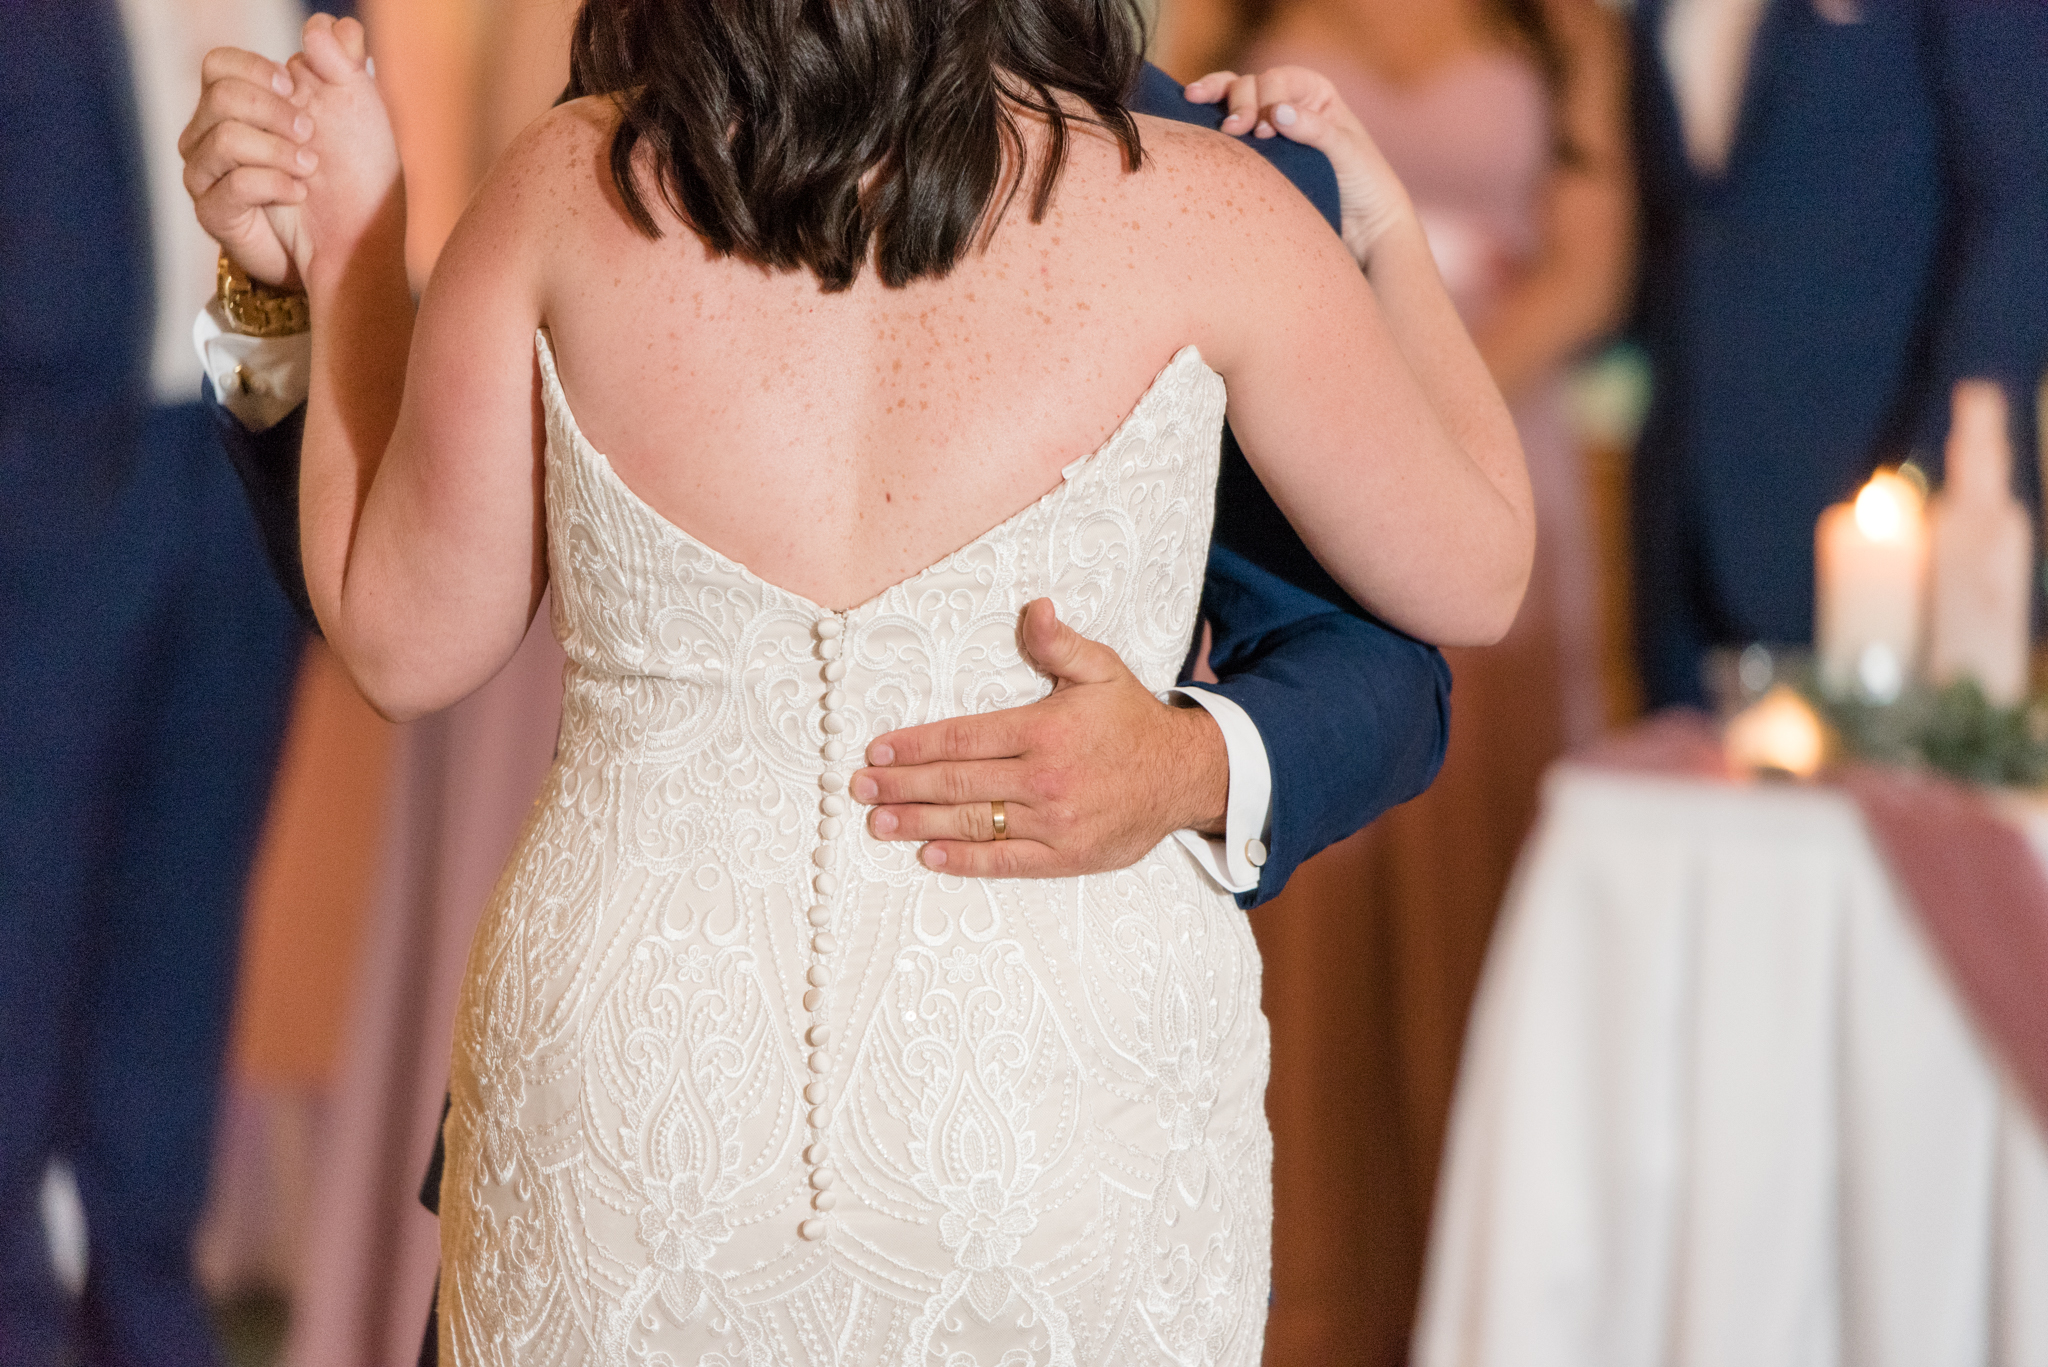 Groom holds bride during dance.